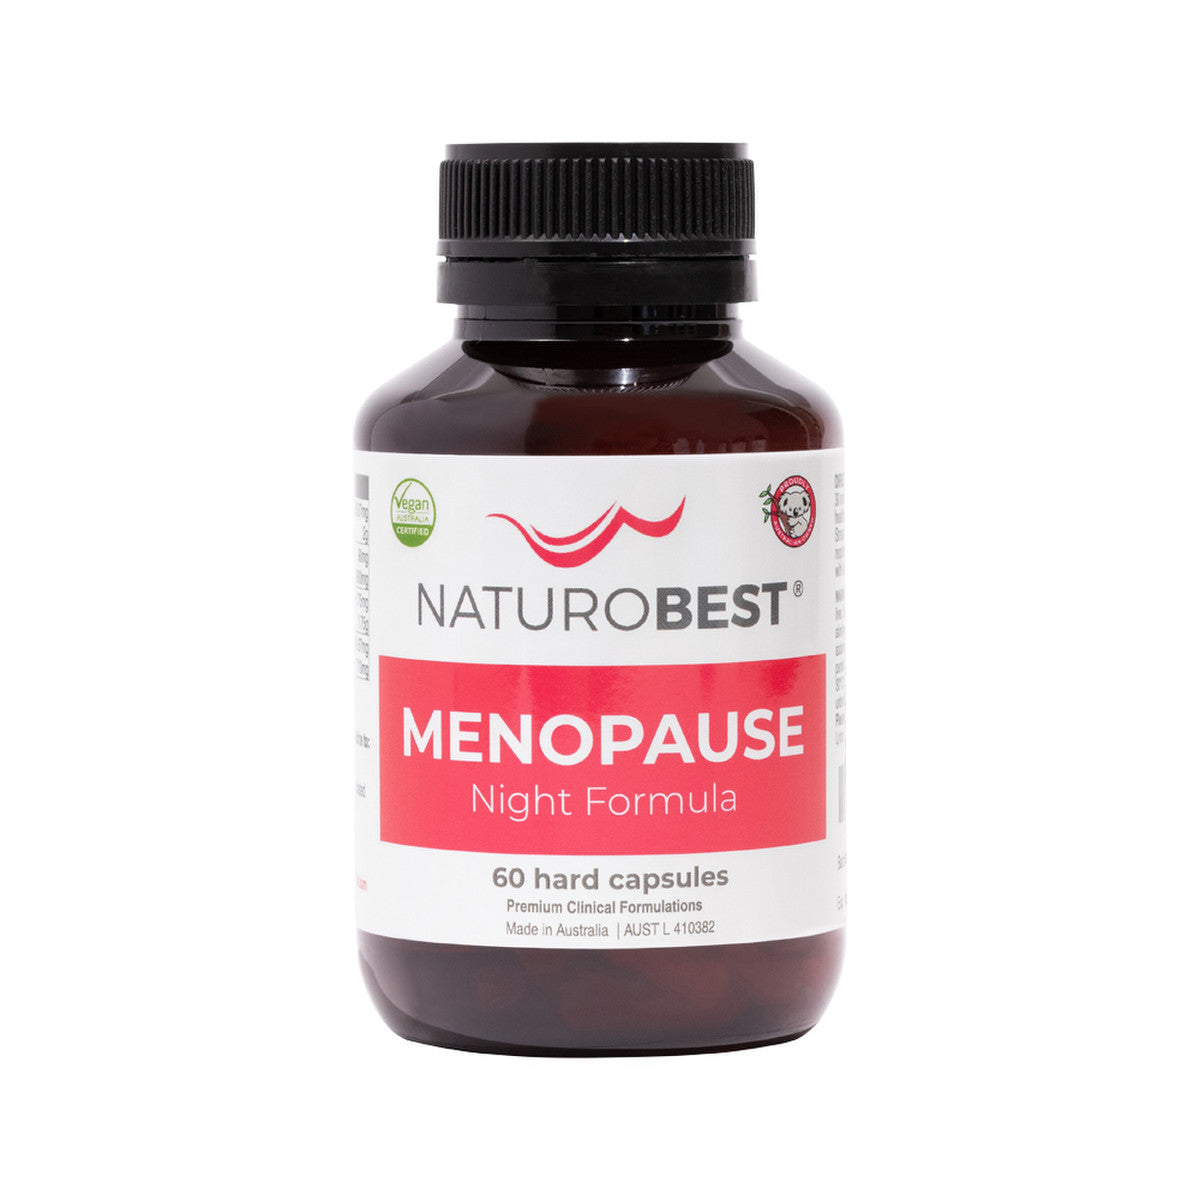 NaturoBest - Menopause Night Formula